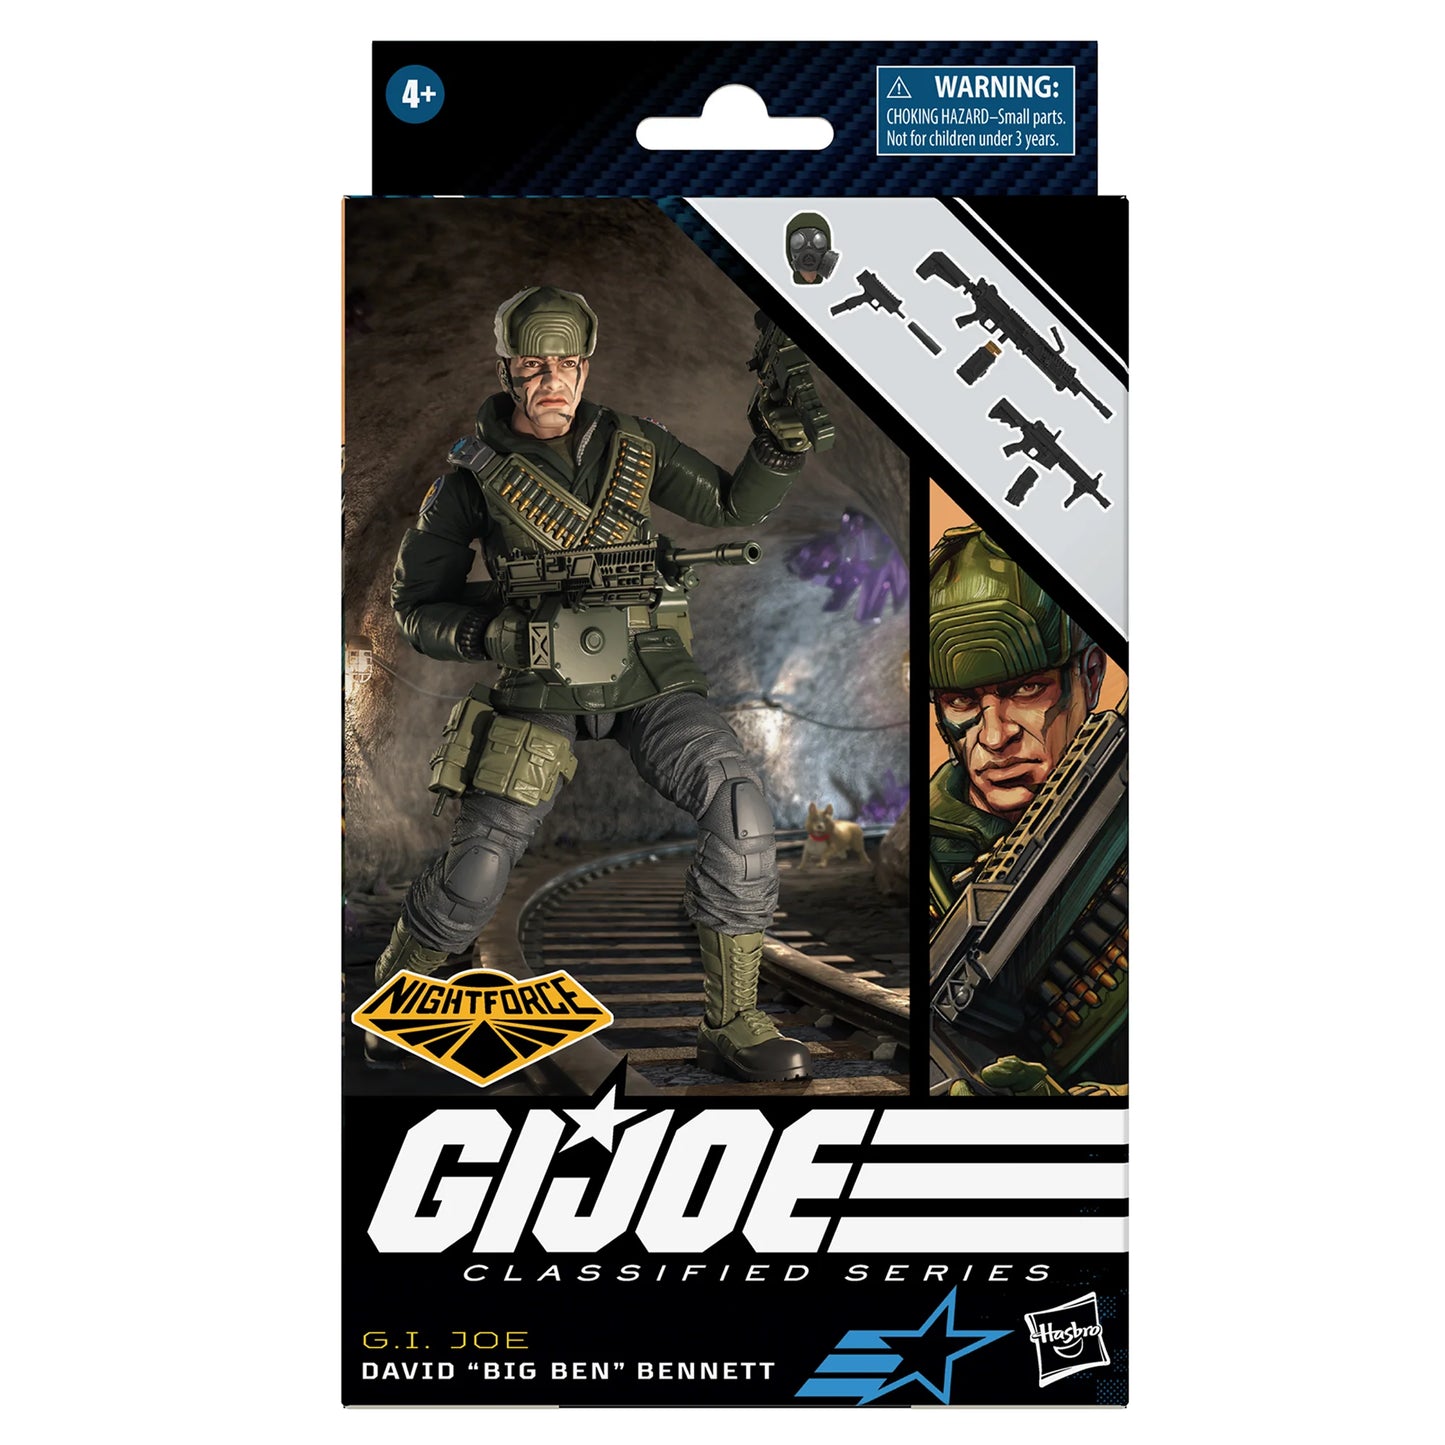 G.I. Joe Classified Series Nightforce David Big Ben Bennett Action Figure #77